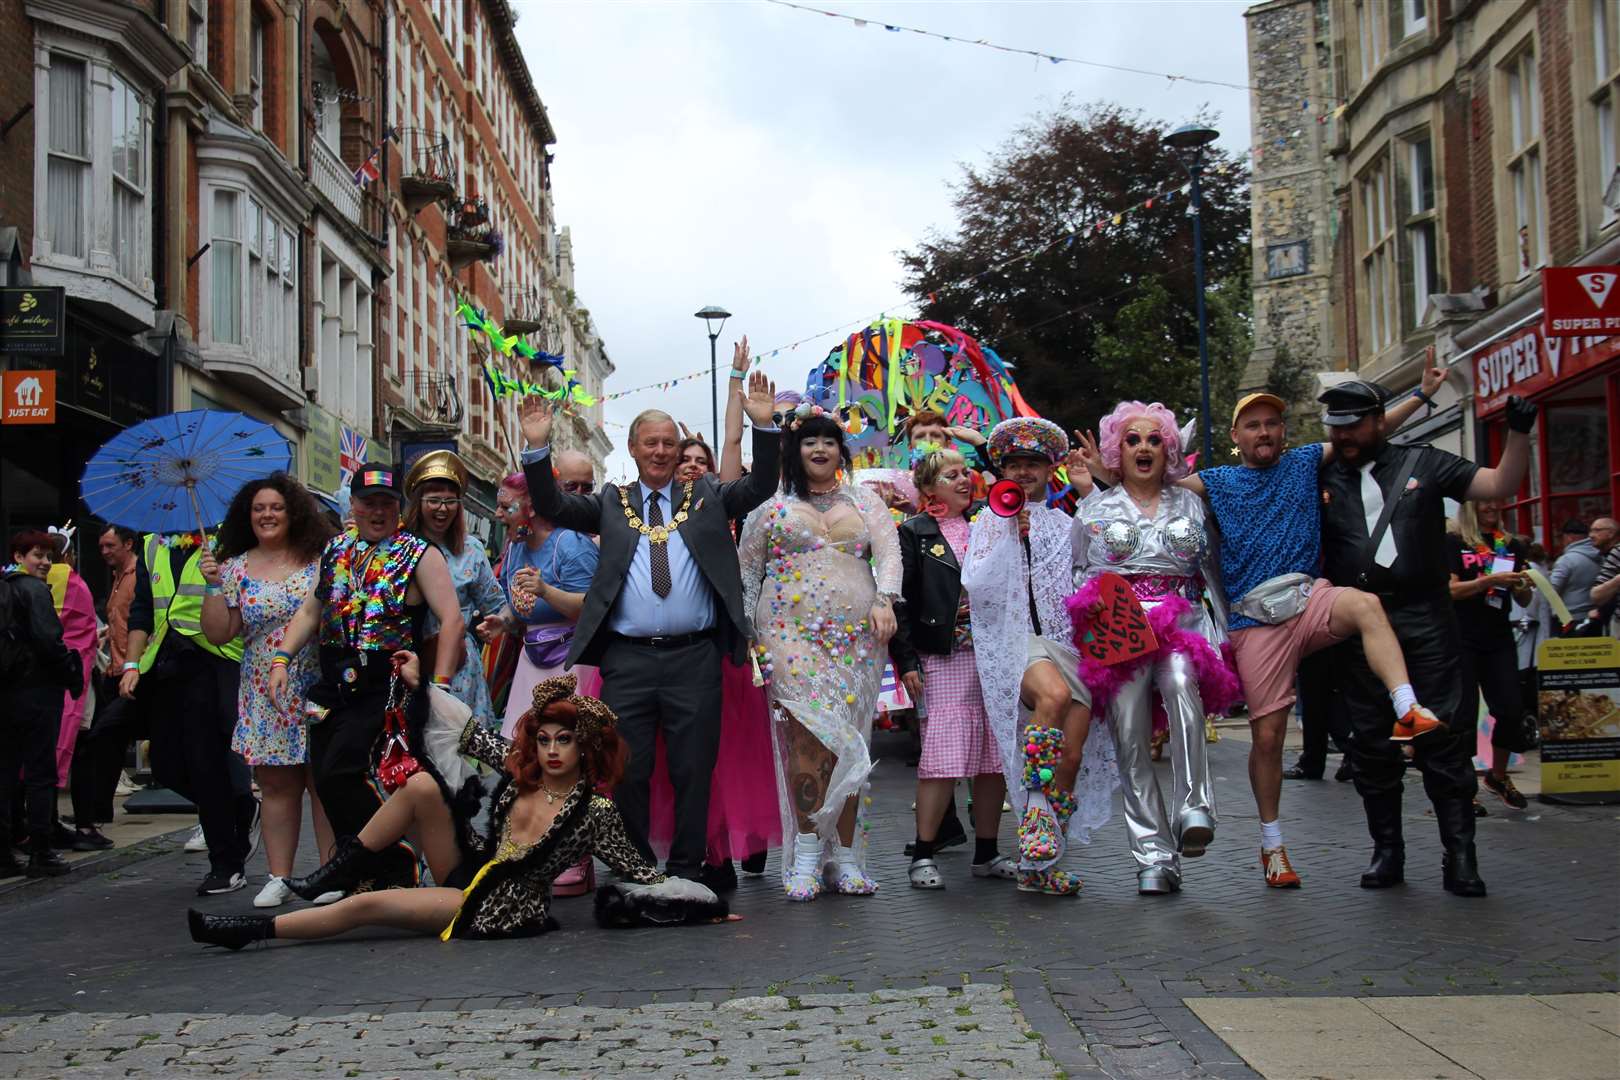 Revellers celebrate LGBTQ+ community as Dover Pride returns